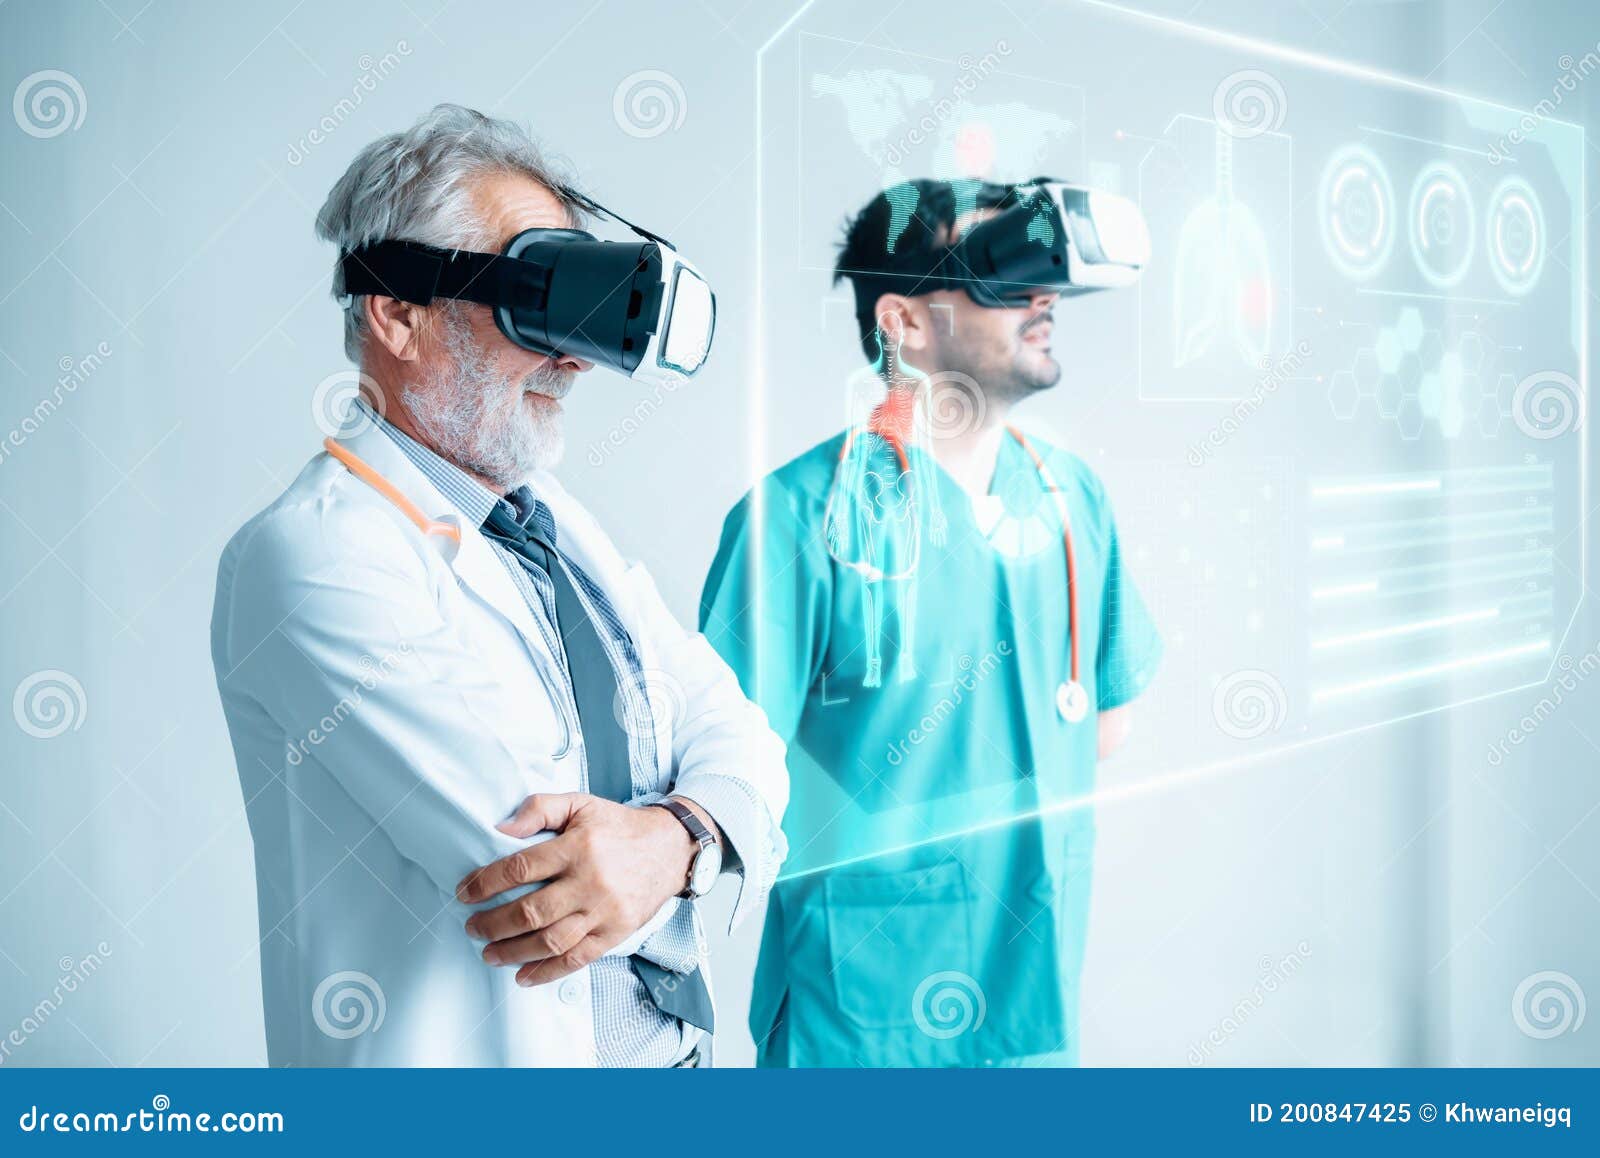 futuristic medical diagnose through virtual reality glasses simulator and screen interactive, doctor team disease diagnosis